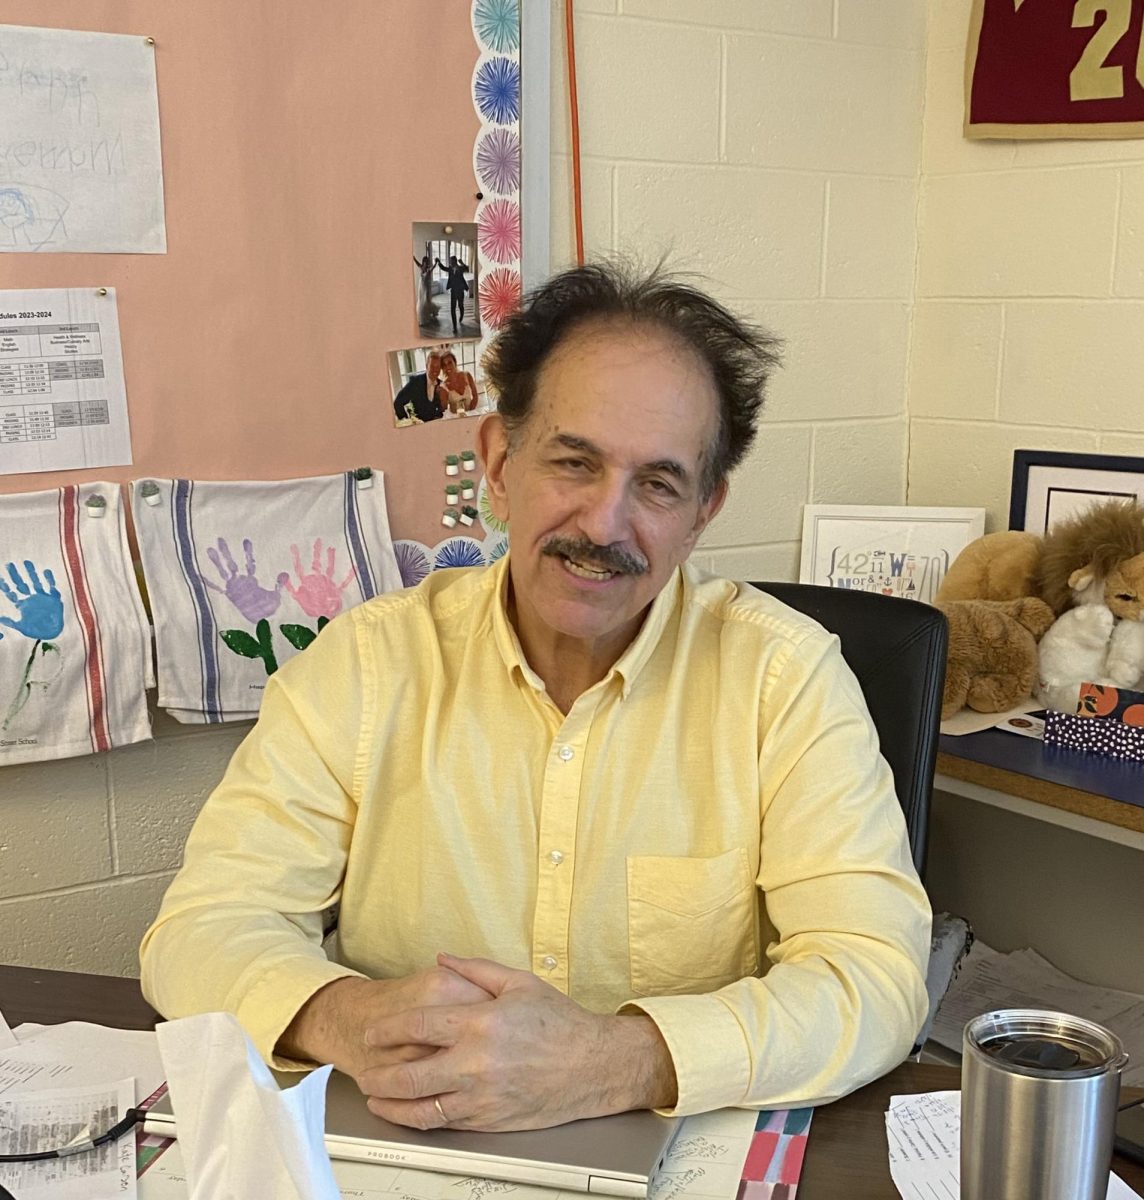 Mr. Haddad returns to brighten the halls of Scituate High School.